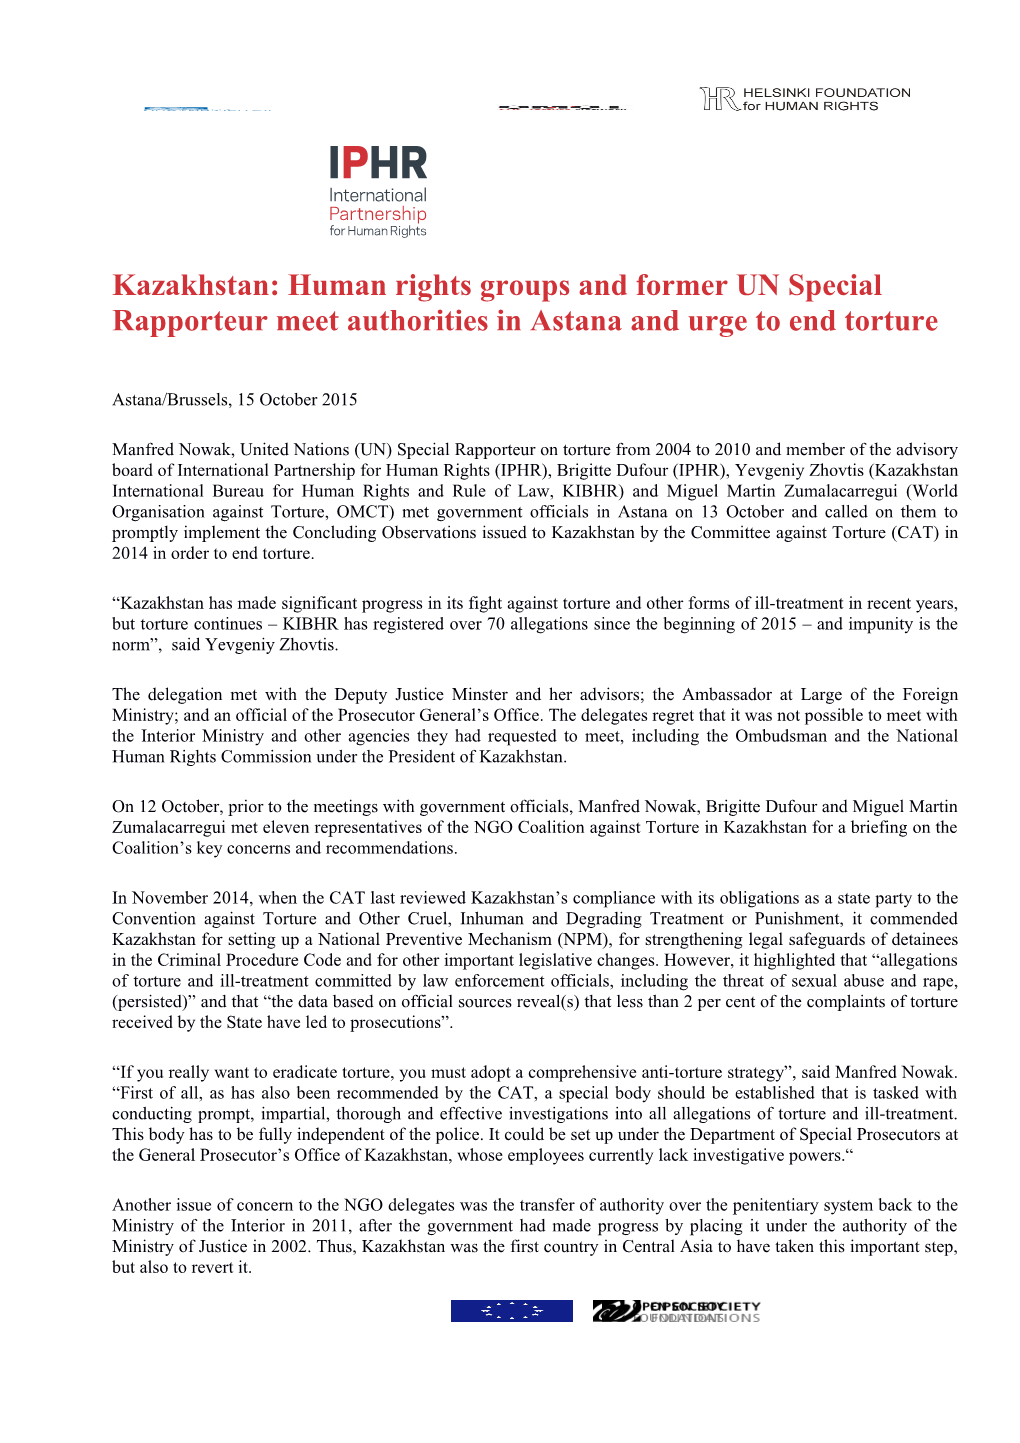 Kazakhstan: Human Rights Groups and Former UN Special Rapporteur Meet Authorities in Astana